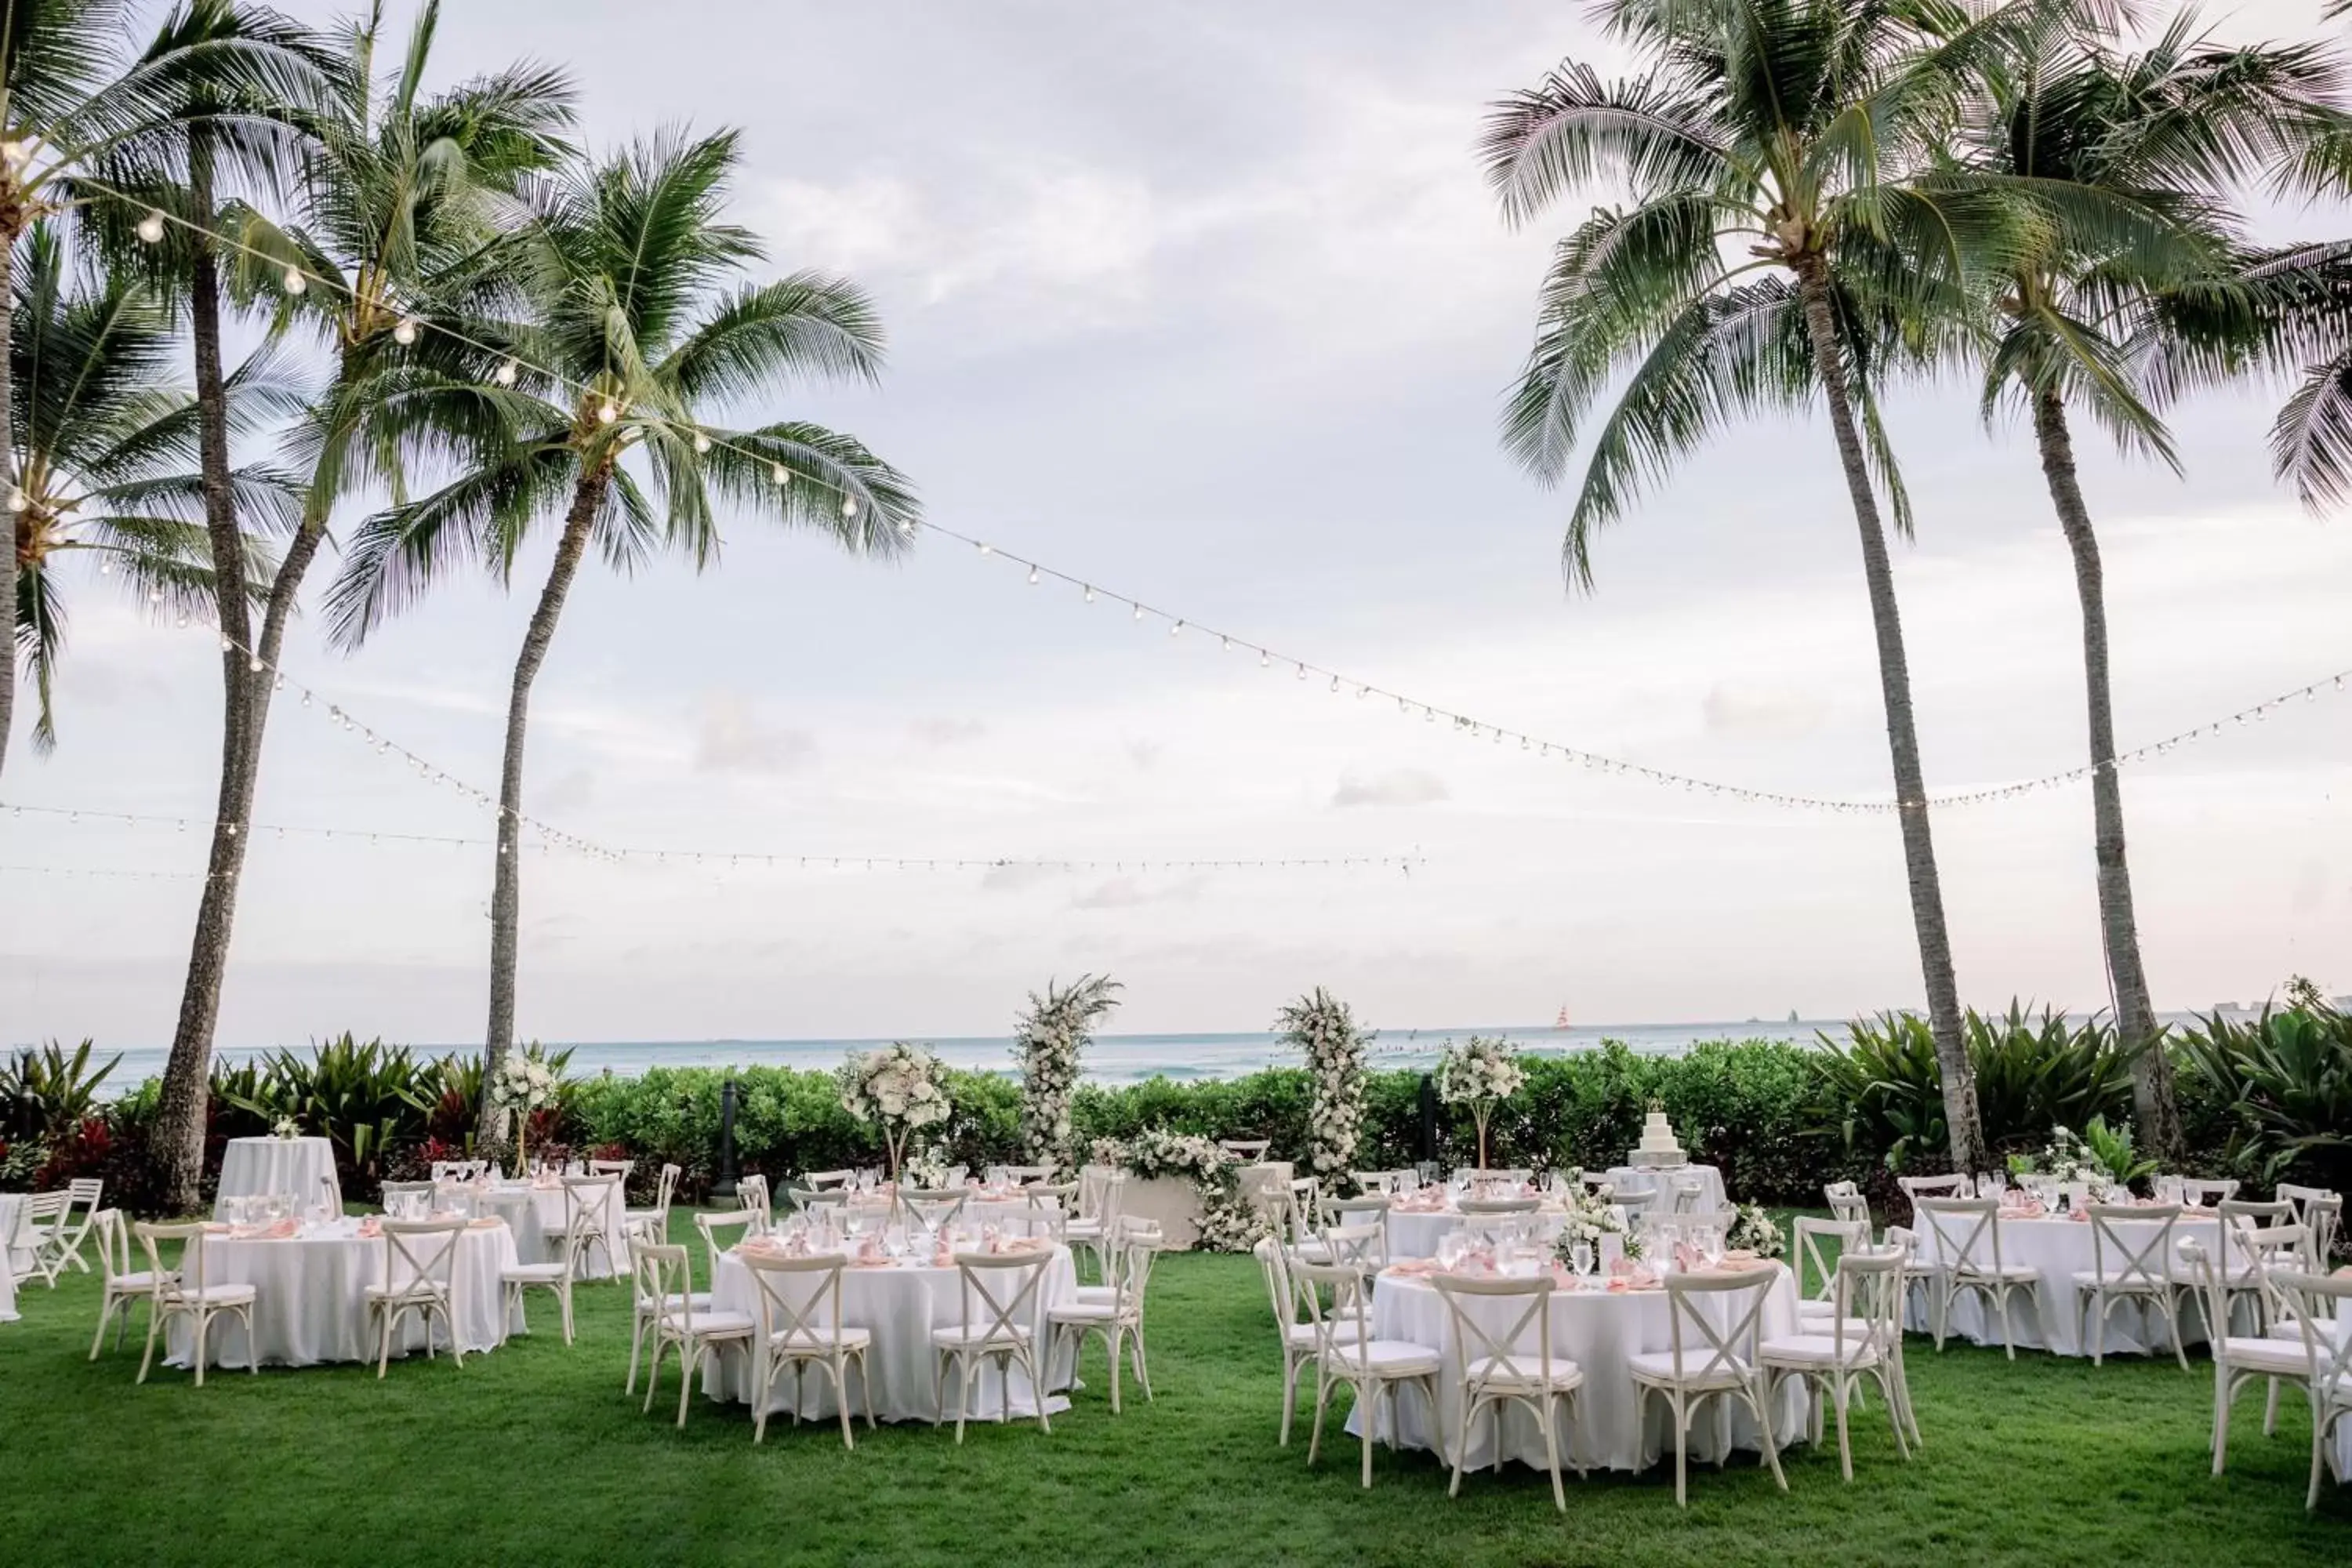 Banquet/Function facilities, Banquet Facilities in Moana Surfrider, A Westin Resort & Spa, Waikiki Beach